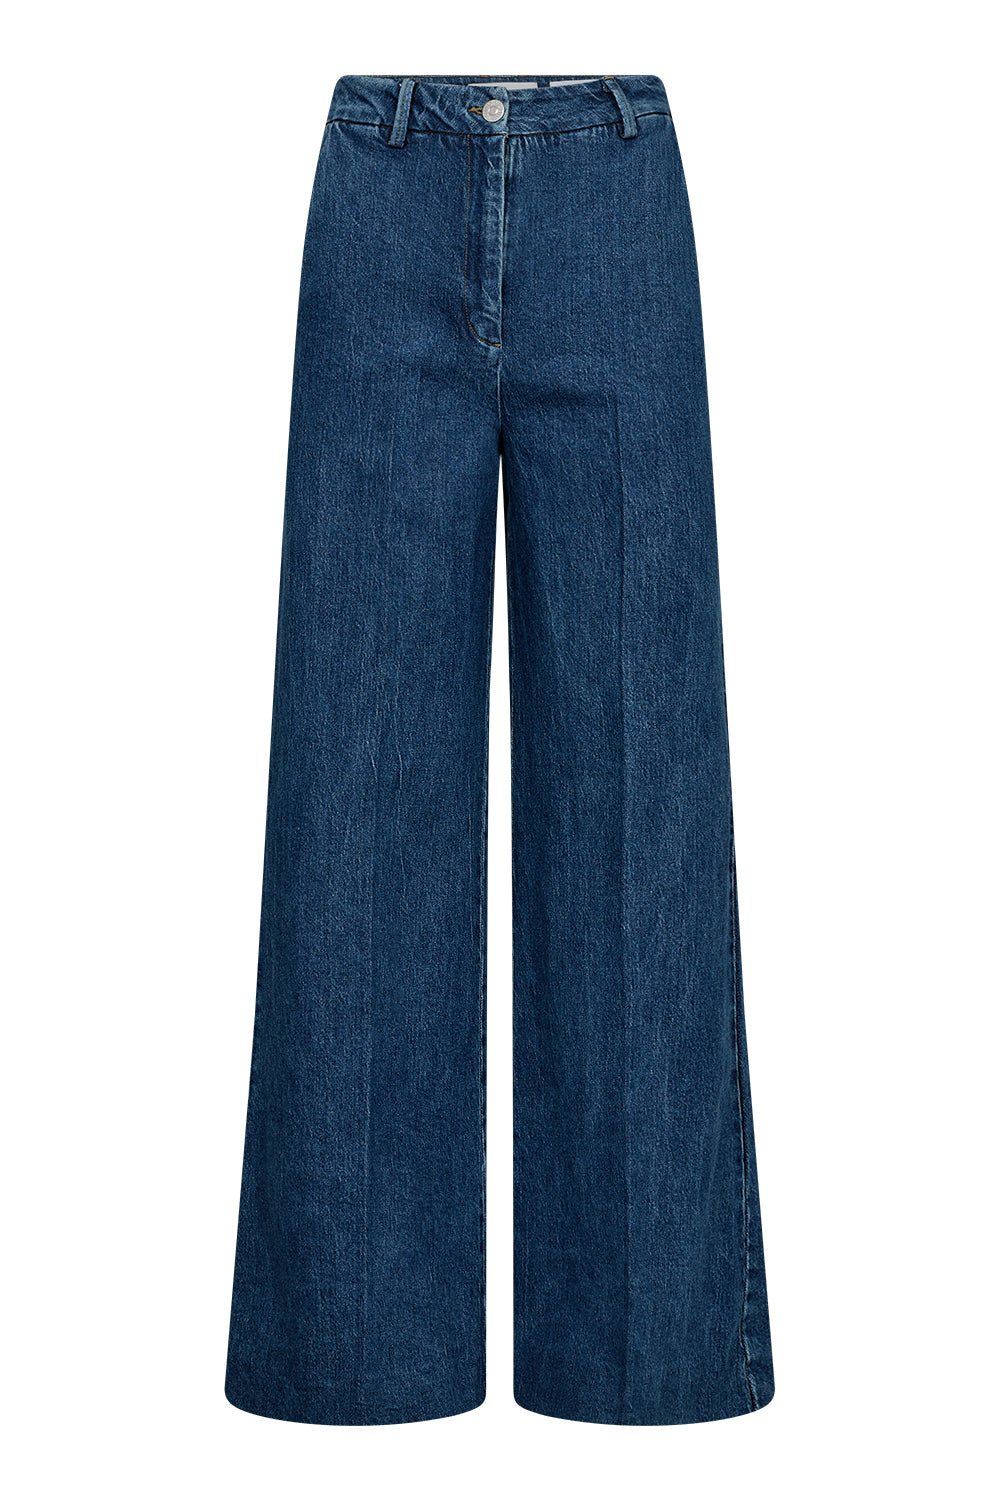 Tomorrow TMRW Ellen Jeans - Phoenix Jeans & Pants 51 Denim Blue